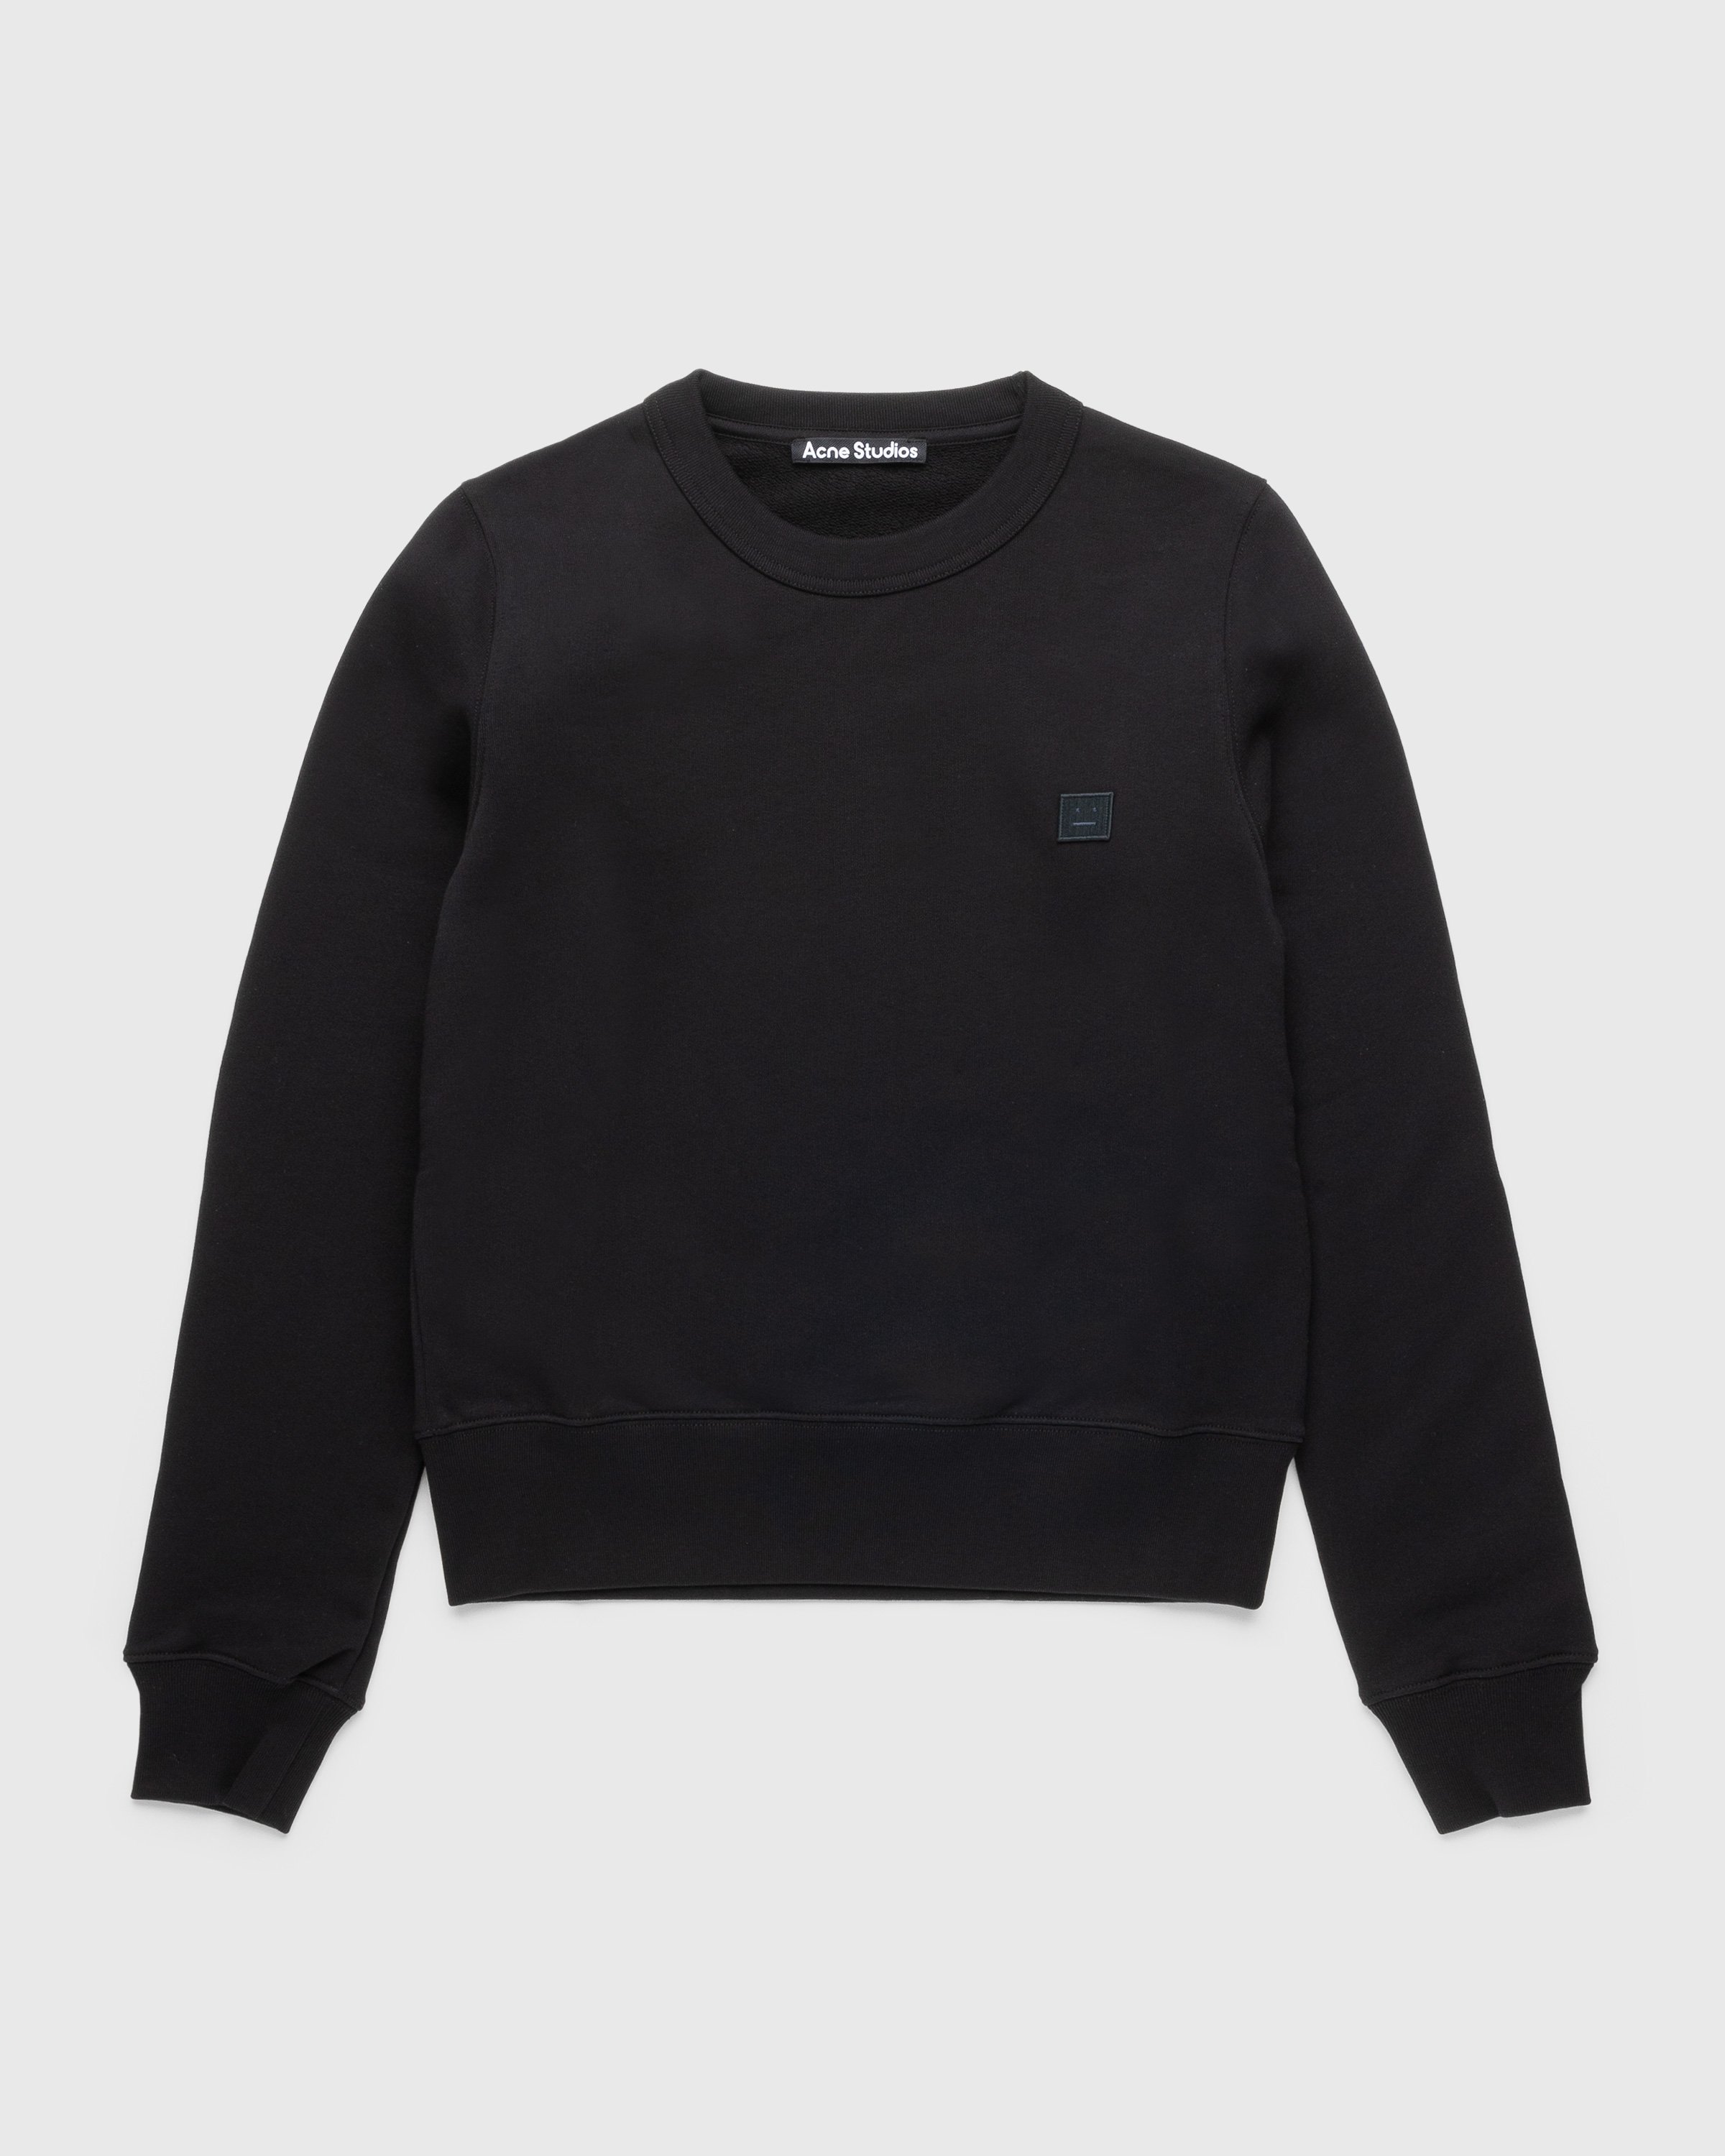 Acne Studios - Organic Cotton Crewneck Sweatshirt Black - Clothing - Black - Image 1